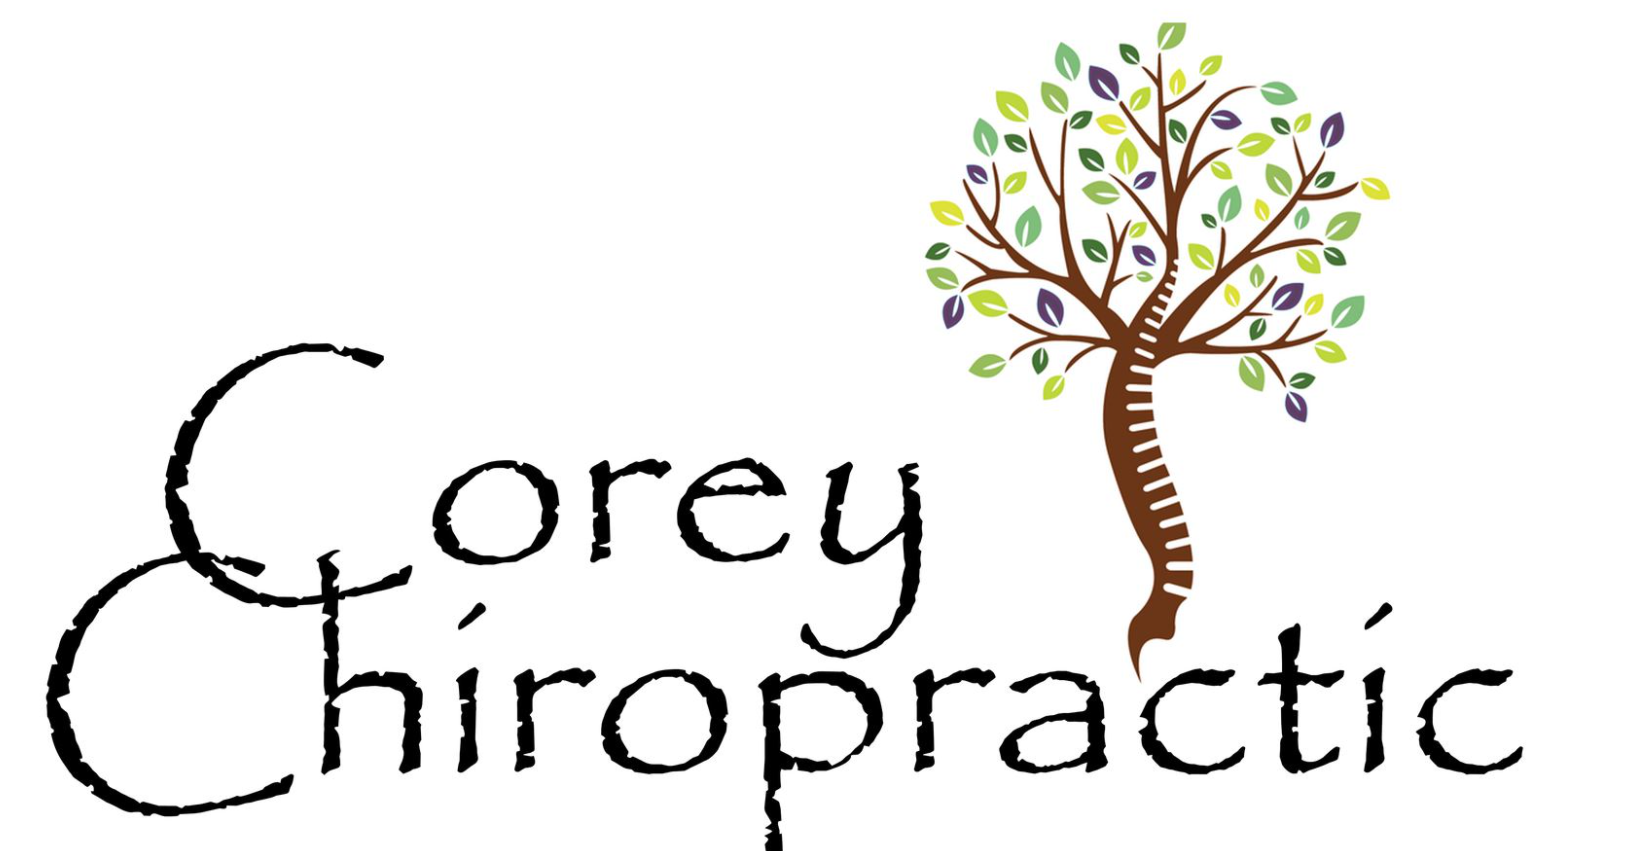 Corey Chiropractic Logo black letter tree.png